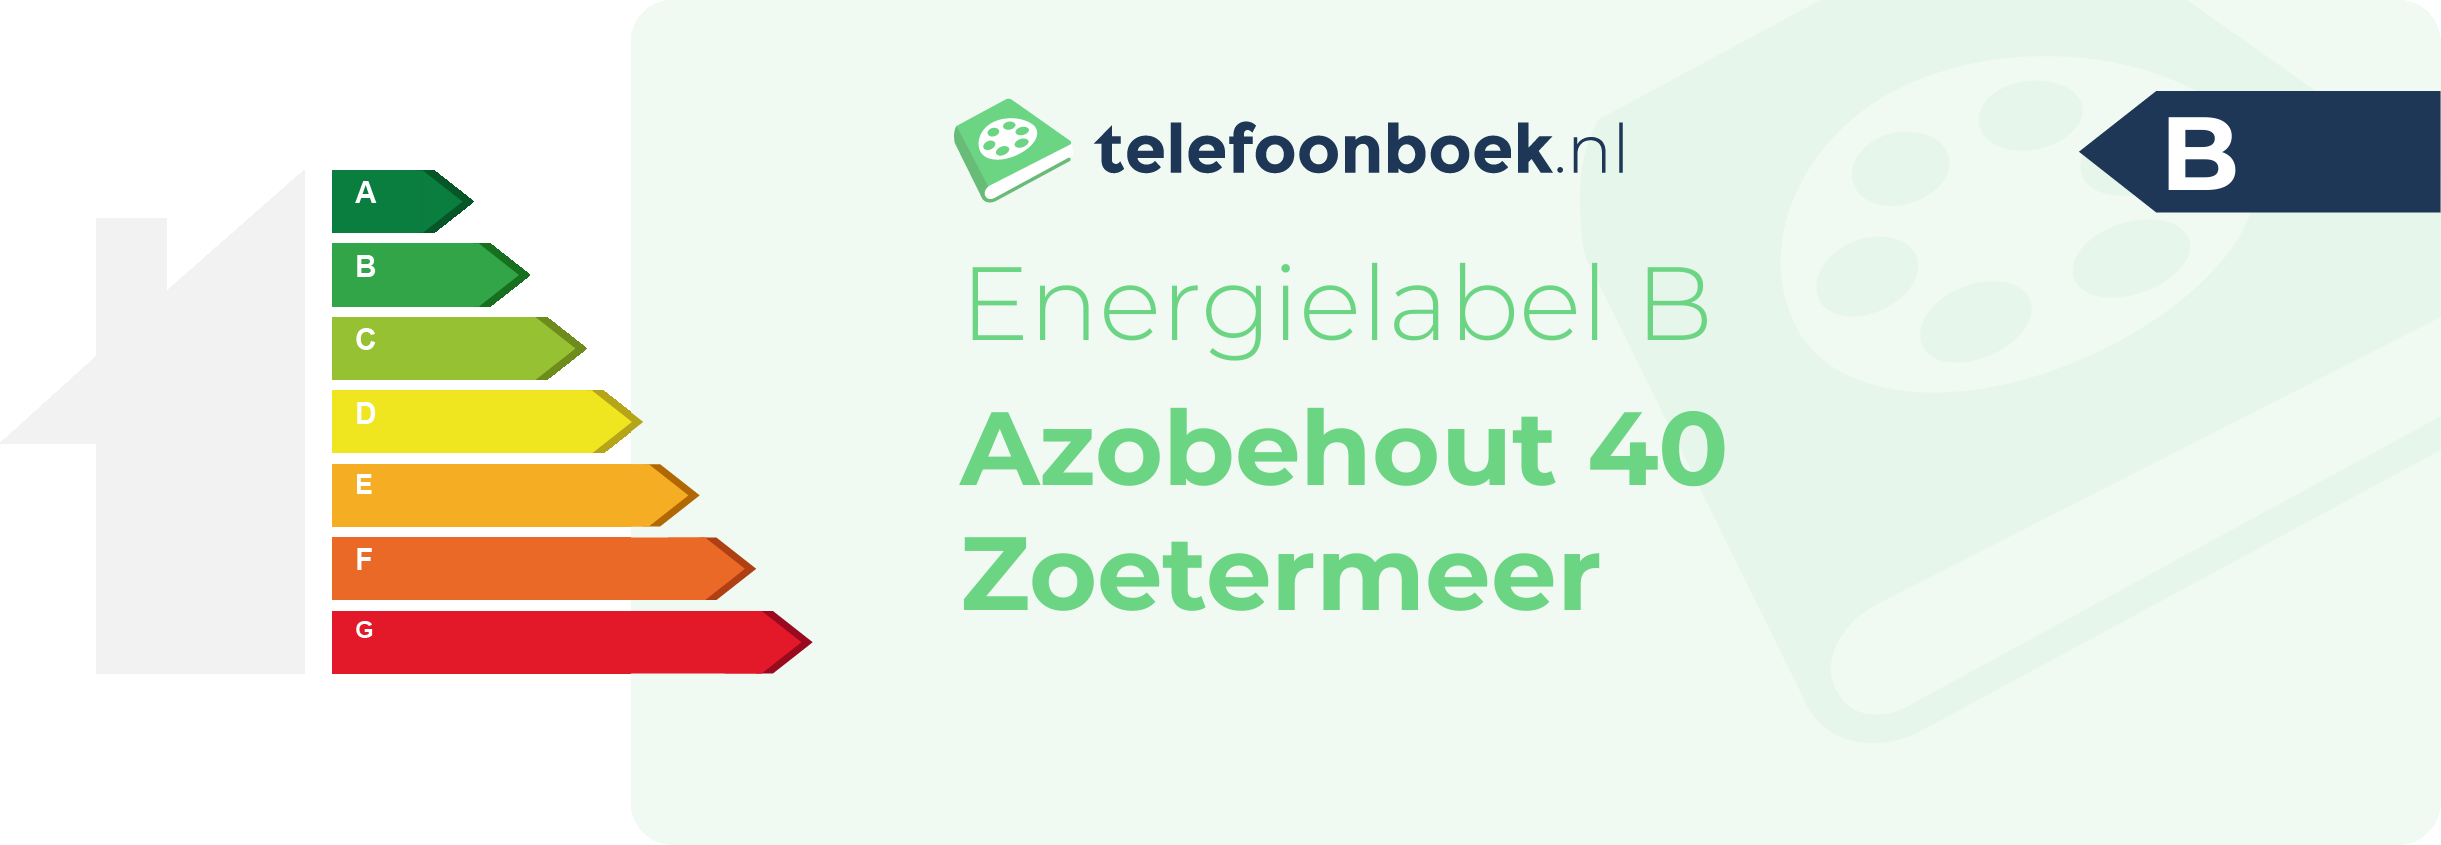 Energielabel Azobehout 40 Zoetermeer